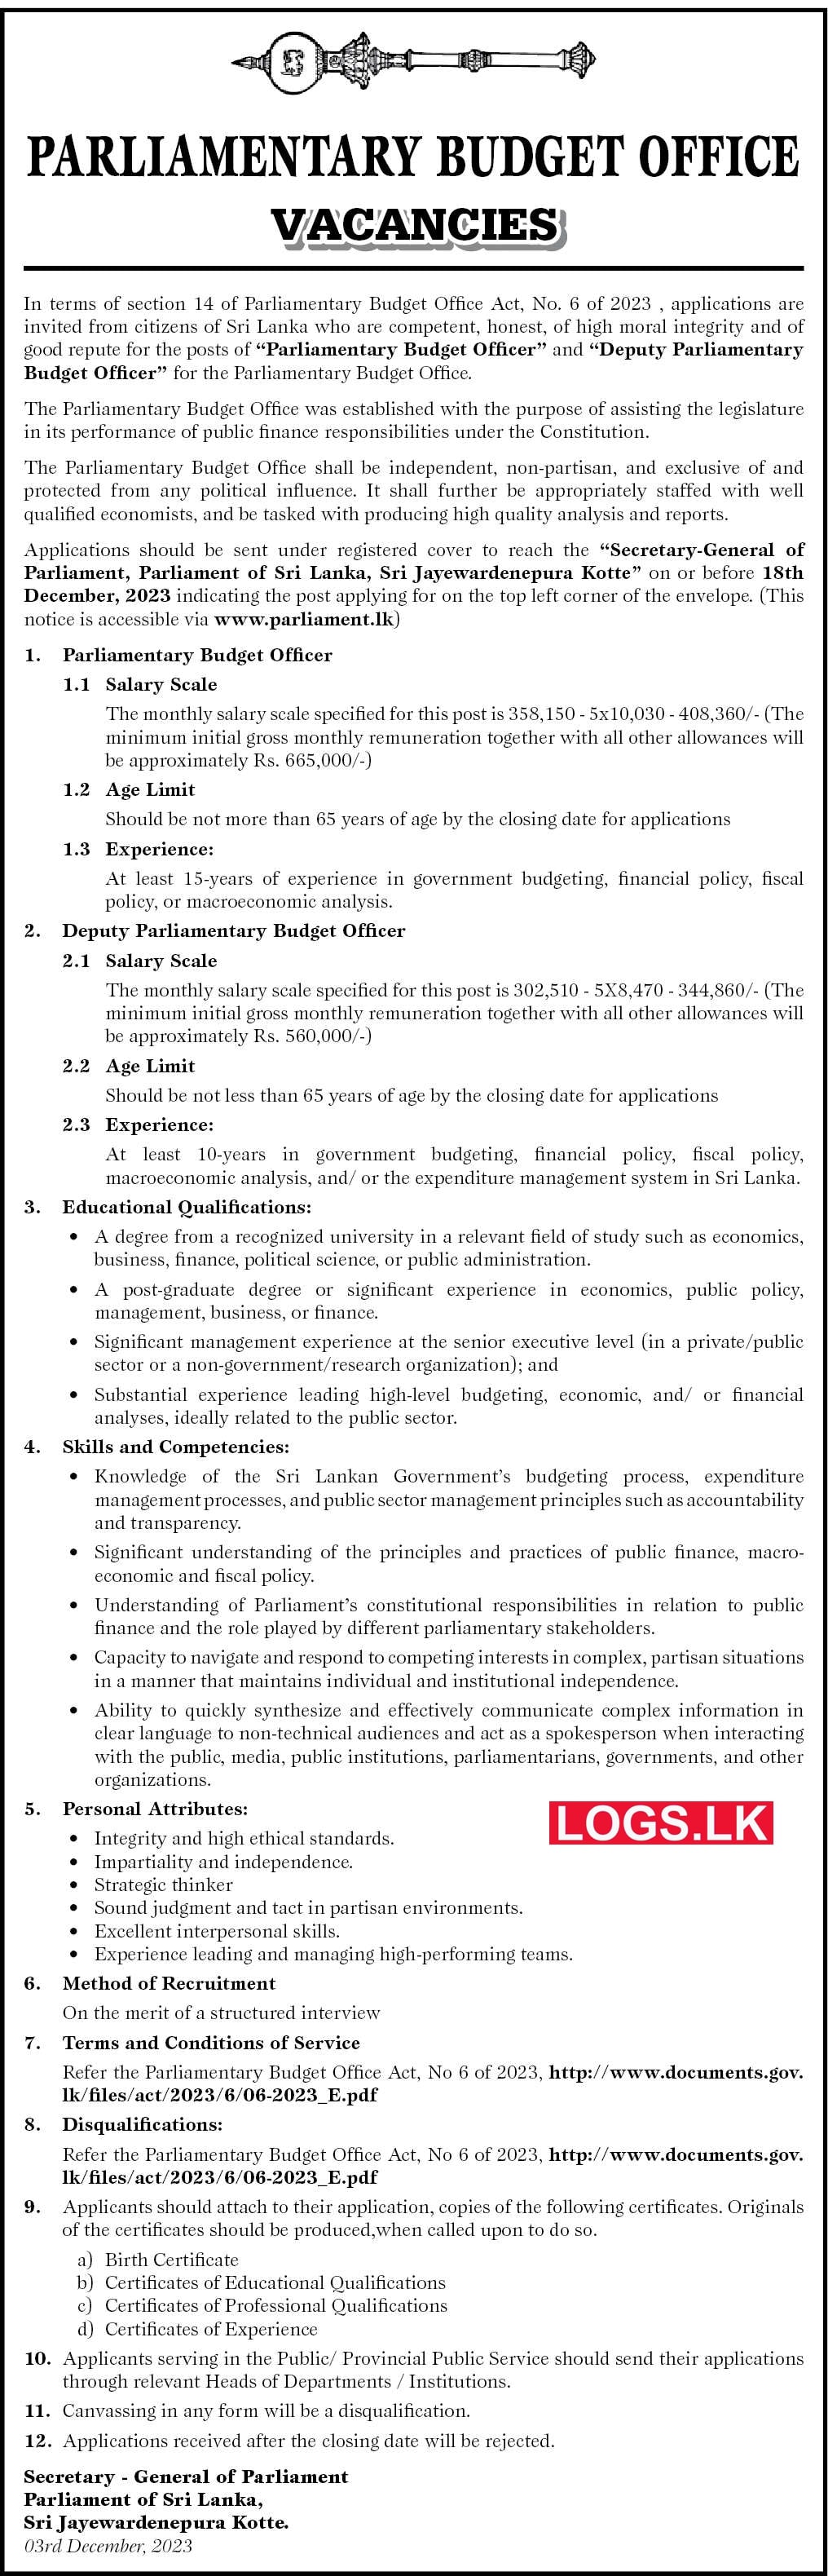 Parliamentary Budget Officer - Parliament Job Vacancies 2024 Application Form, Details Download